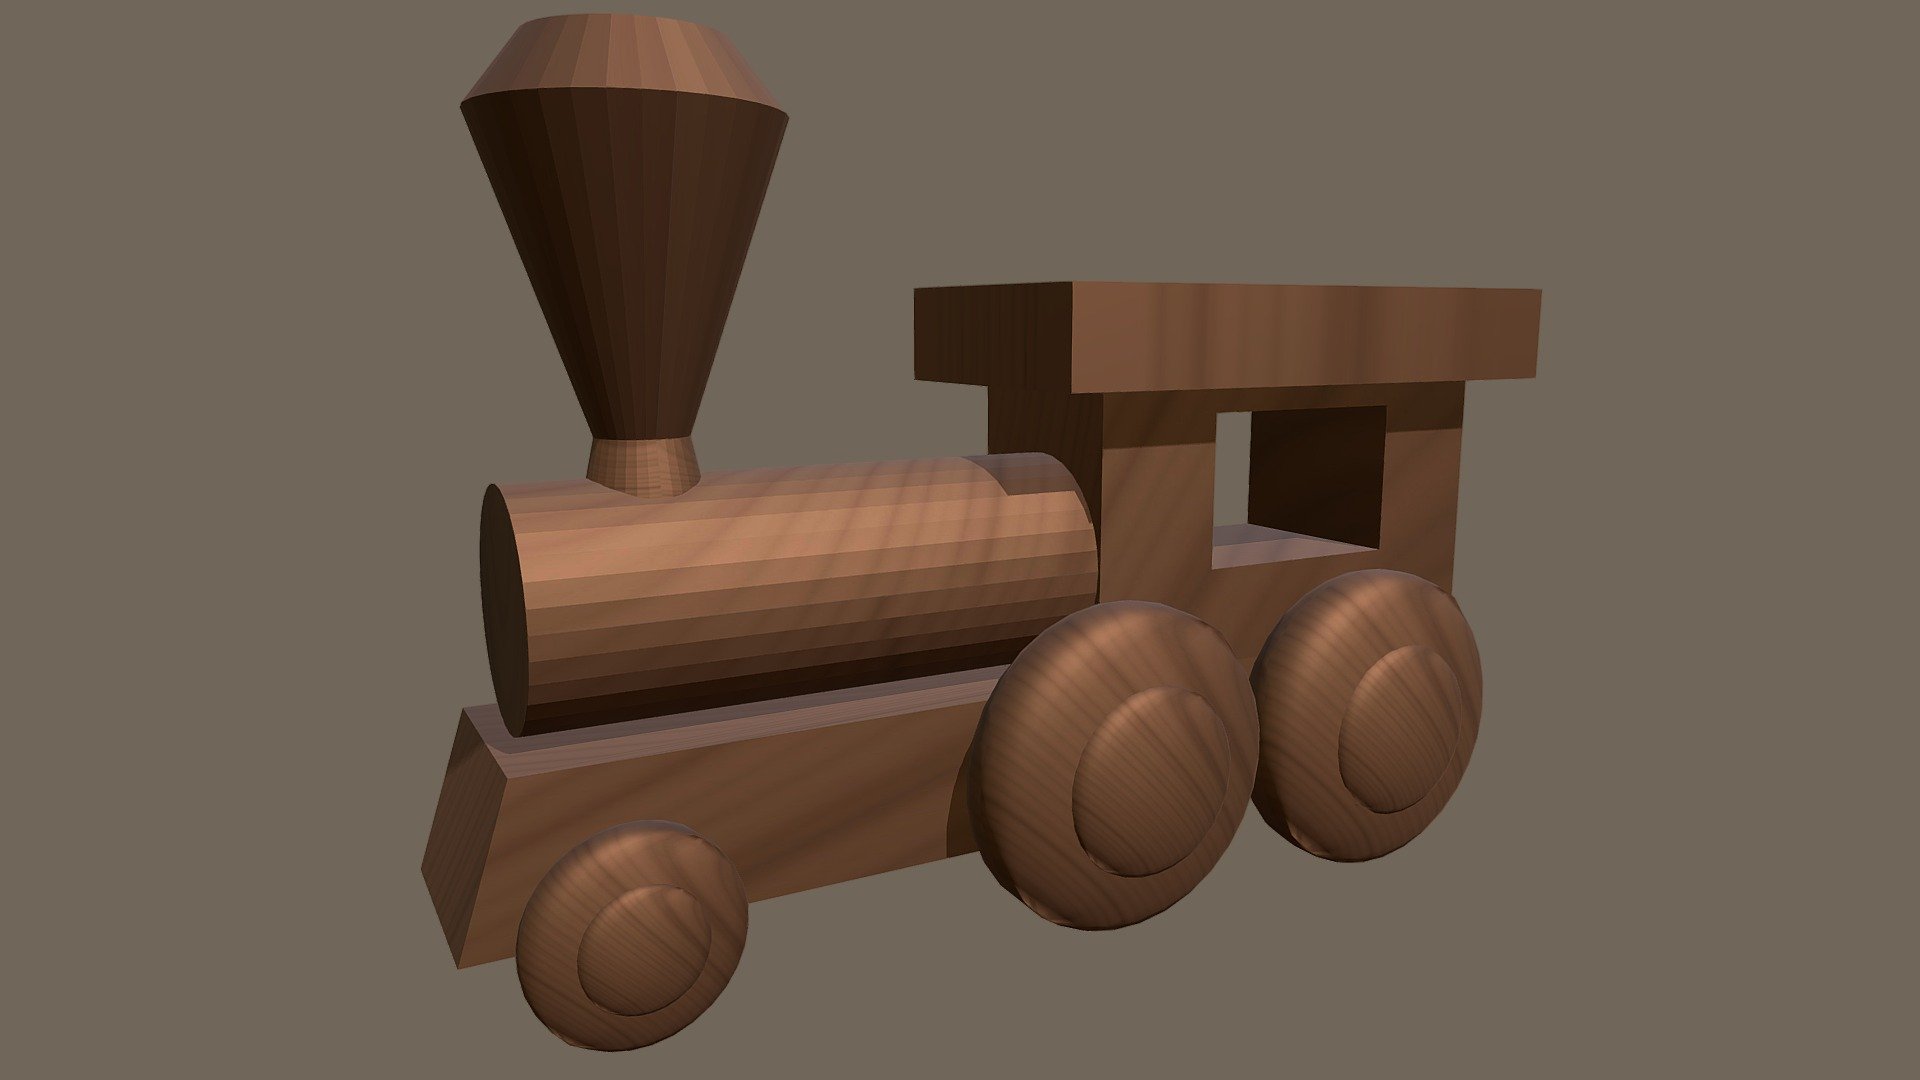 Sketchbook 5 - [Wooden Toy Train]